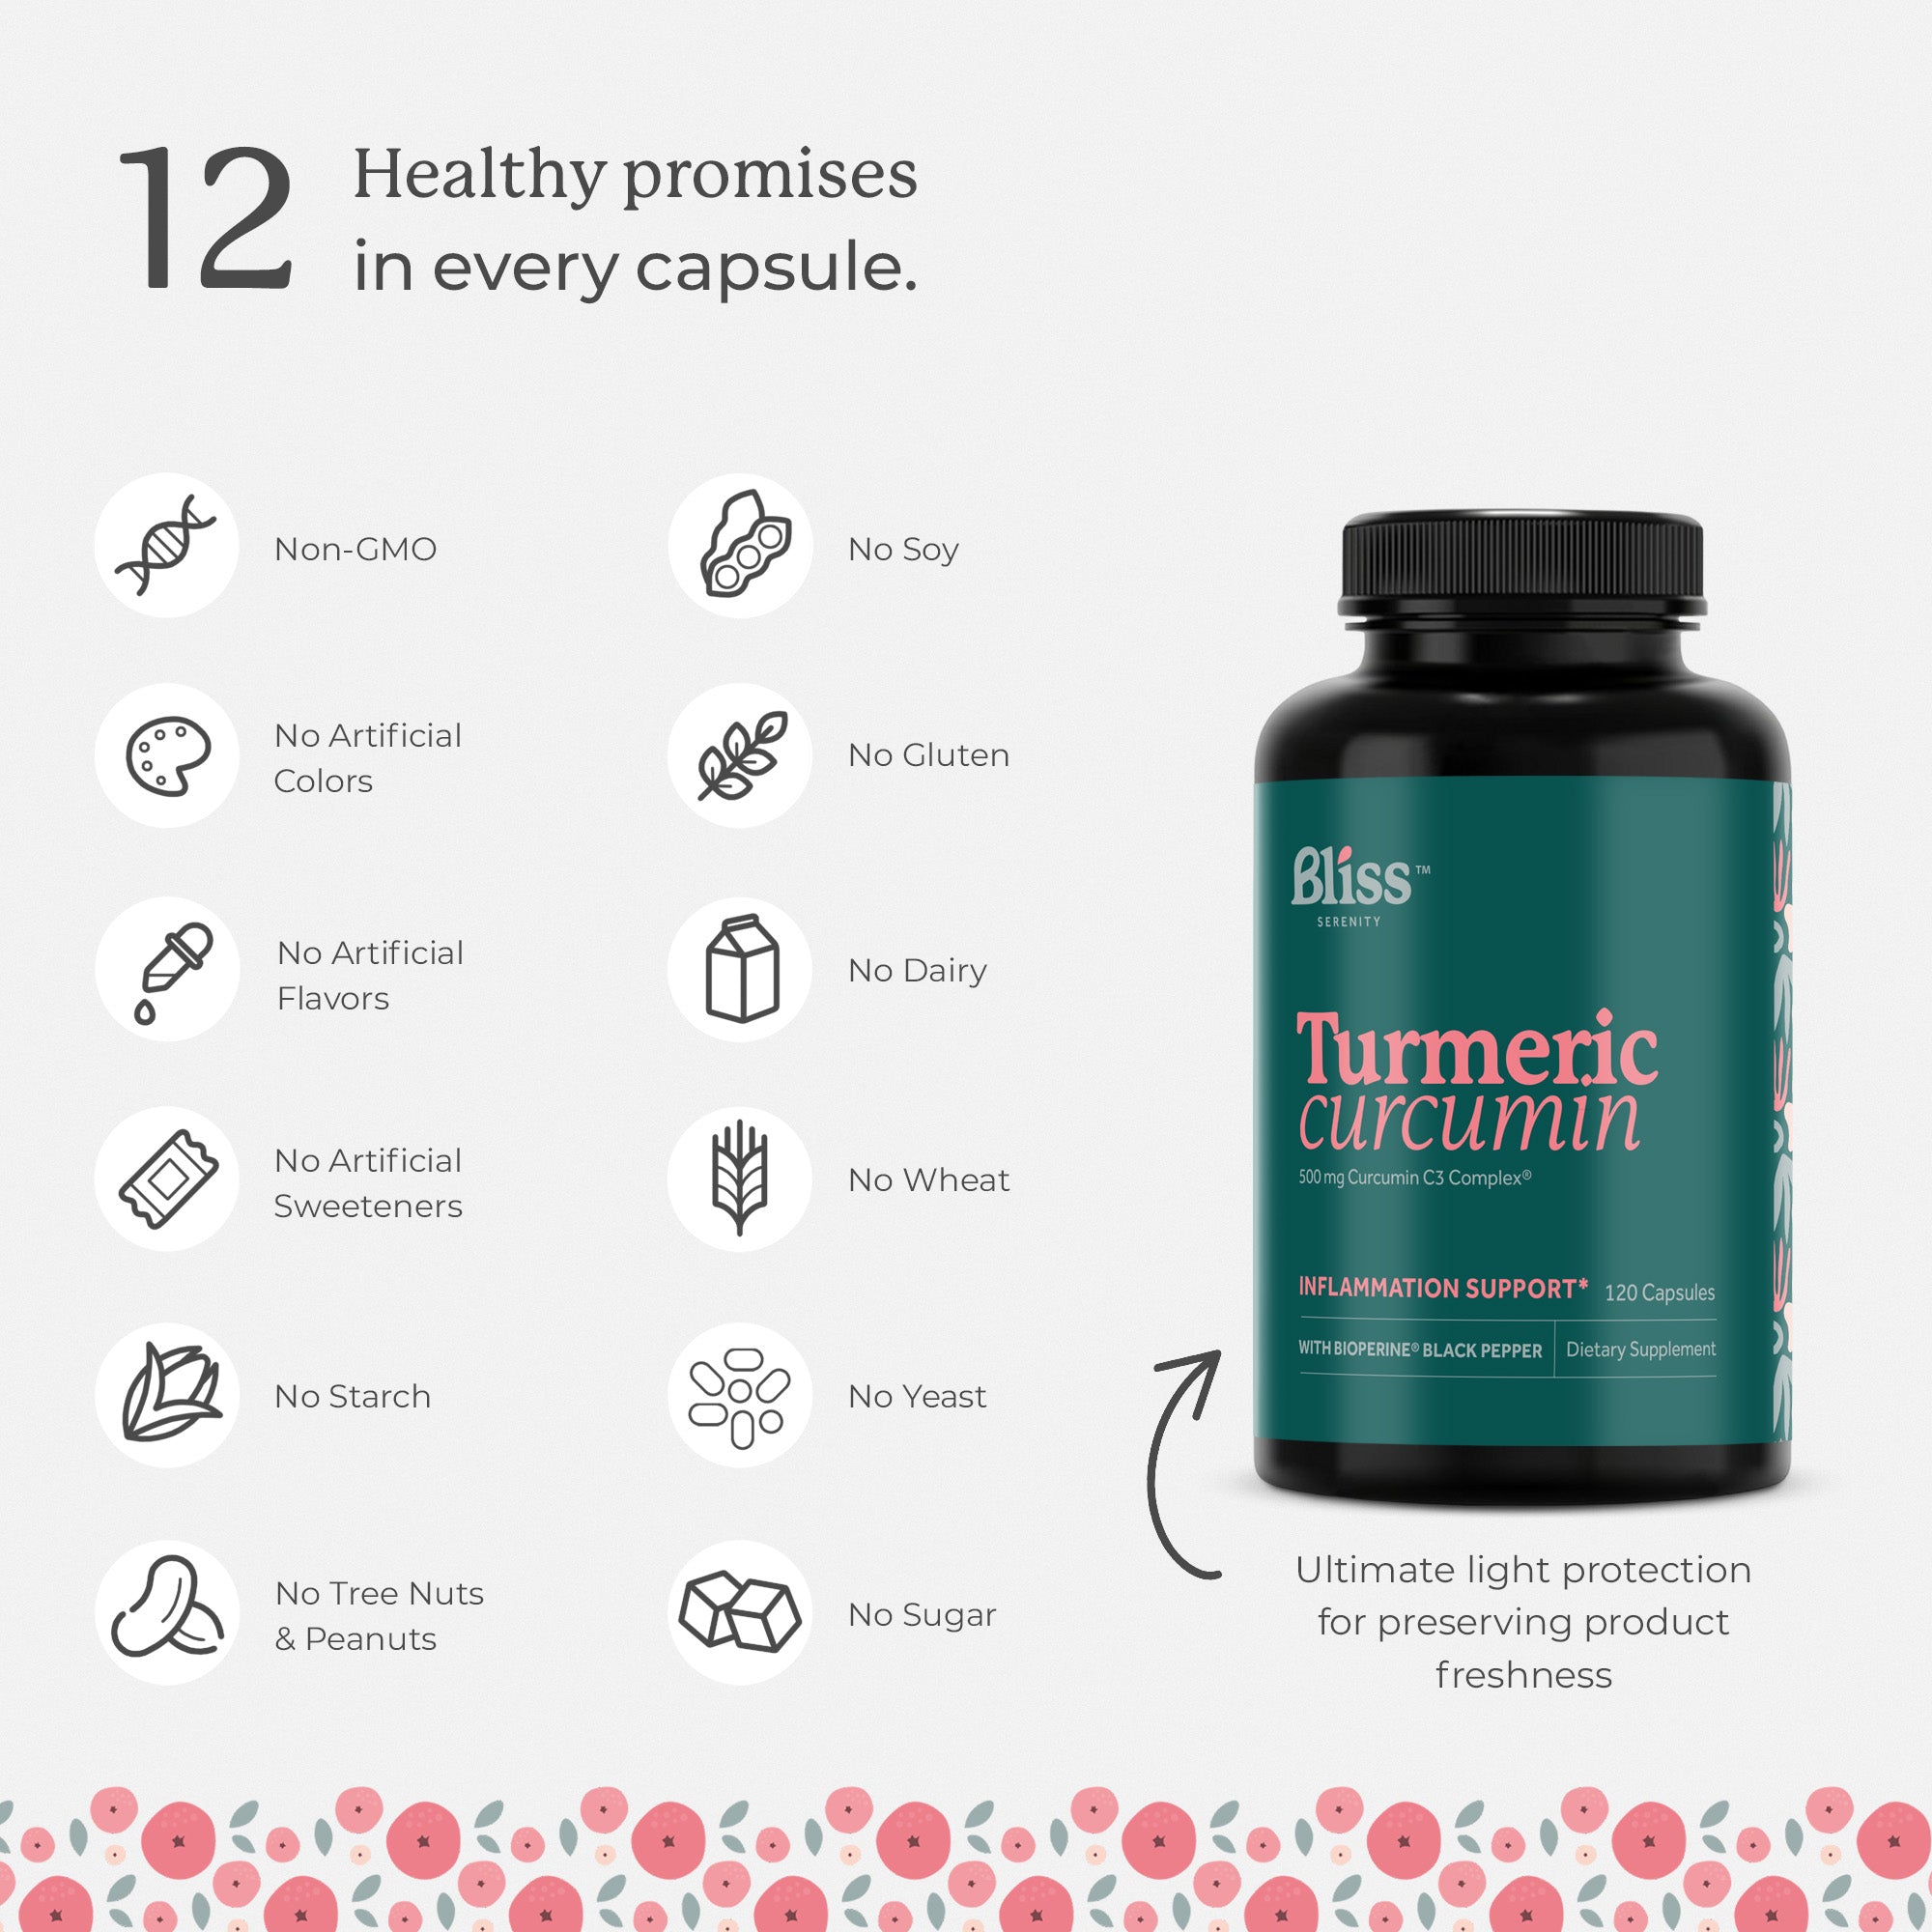 Bliss Serenity Turmeric Curcumin C3 Complex 500 mg, 120 Day Supply